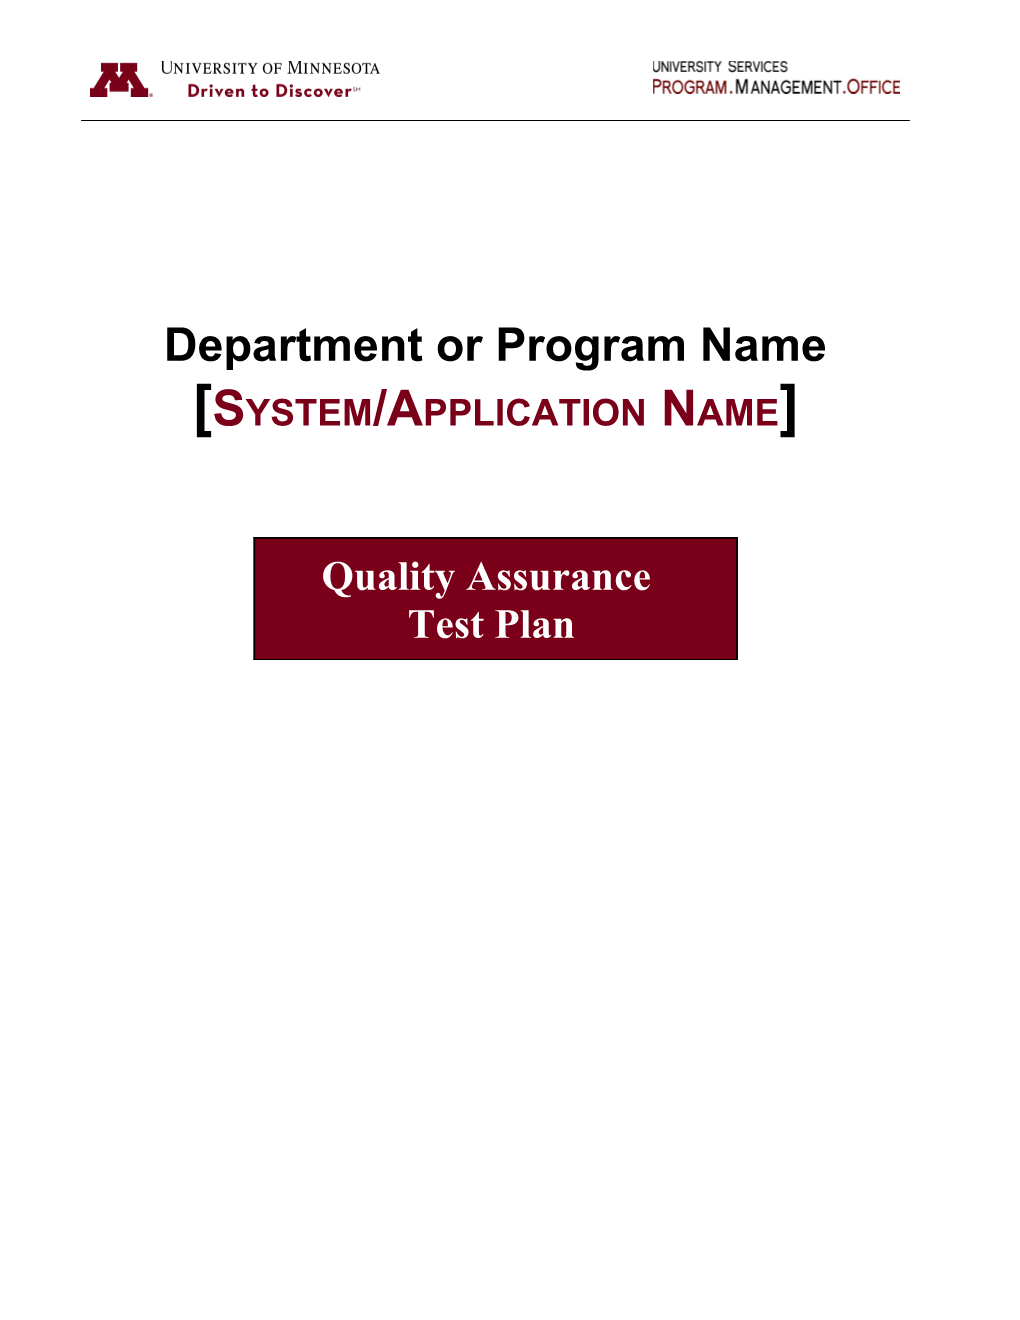 Quality Assurance Test Plan